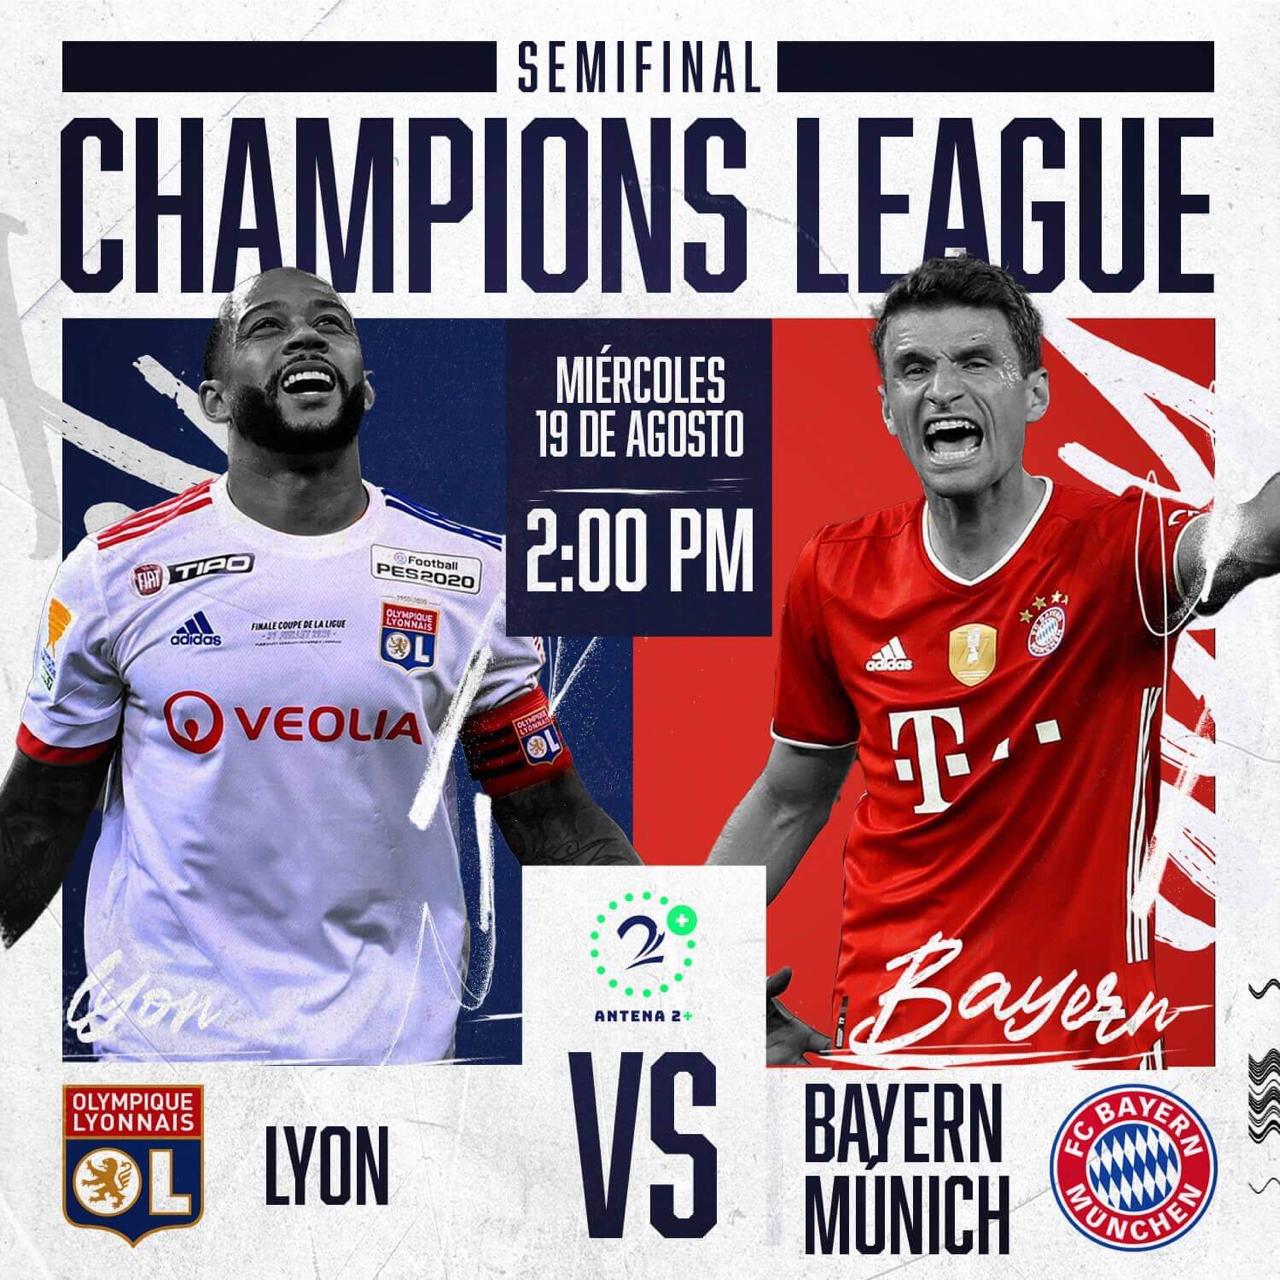 Lyon vs Bayern Munich